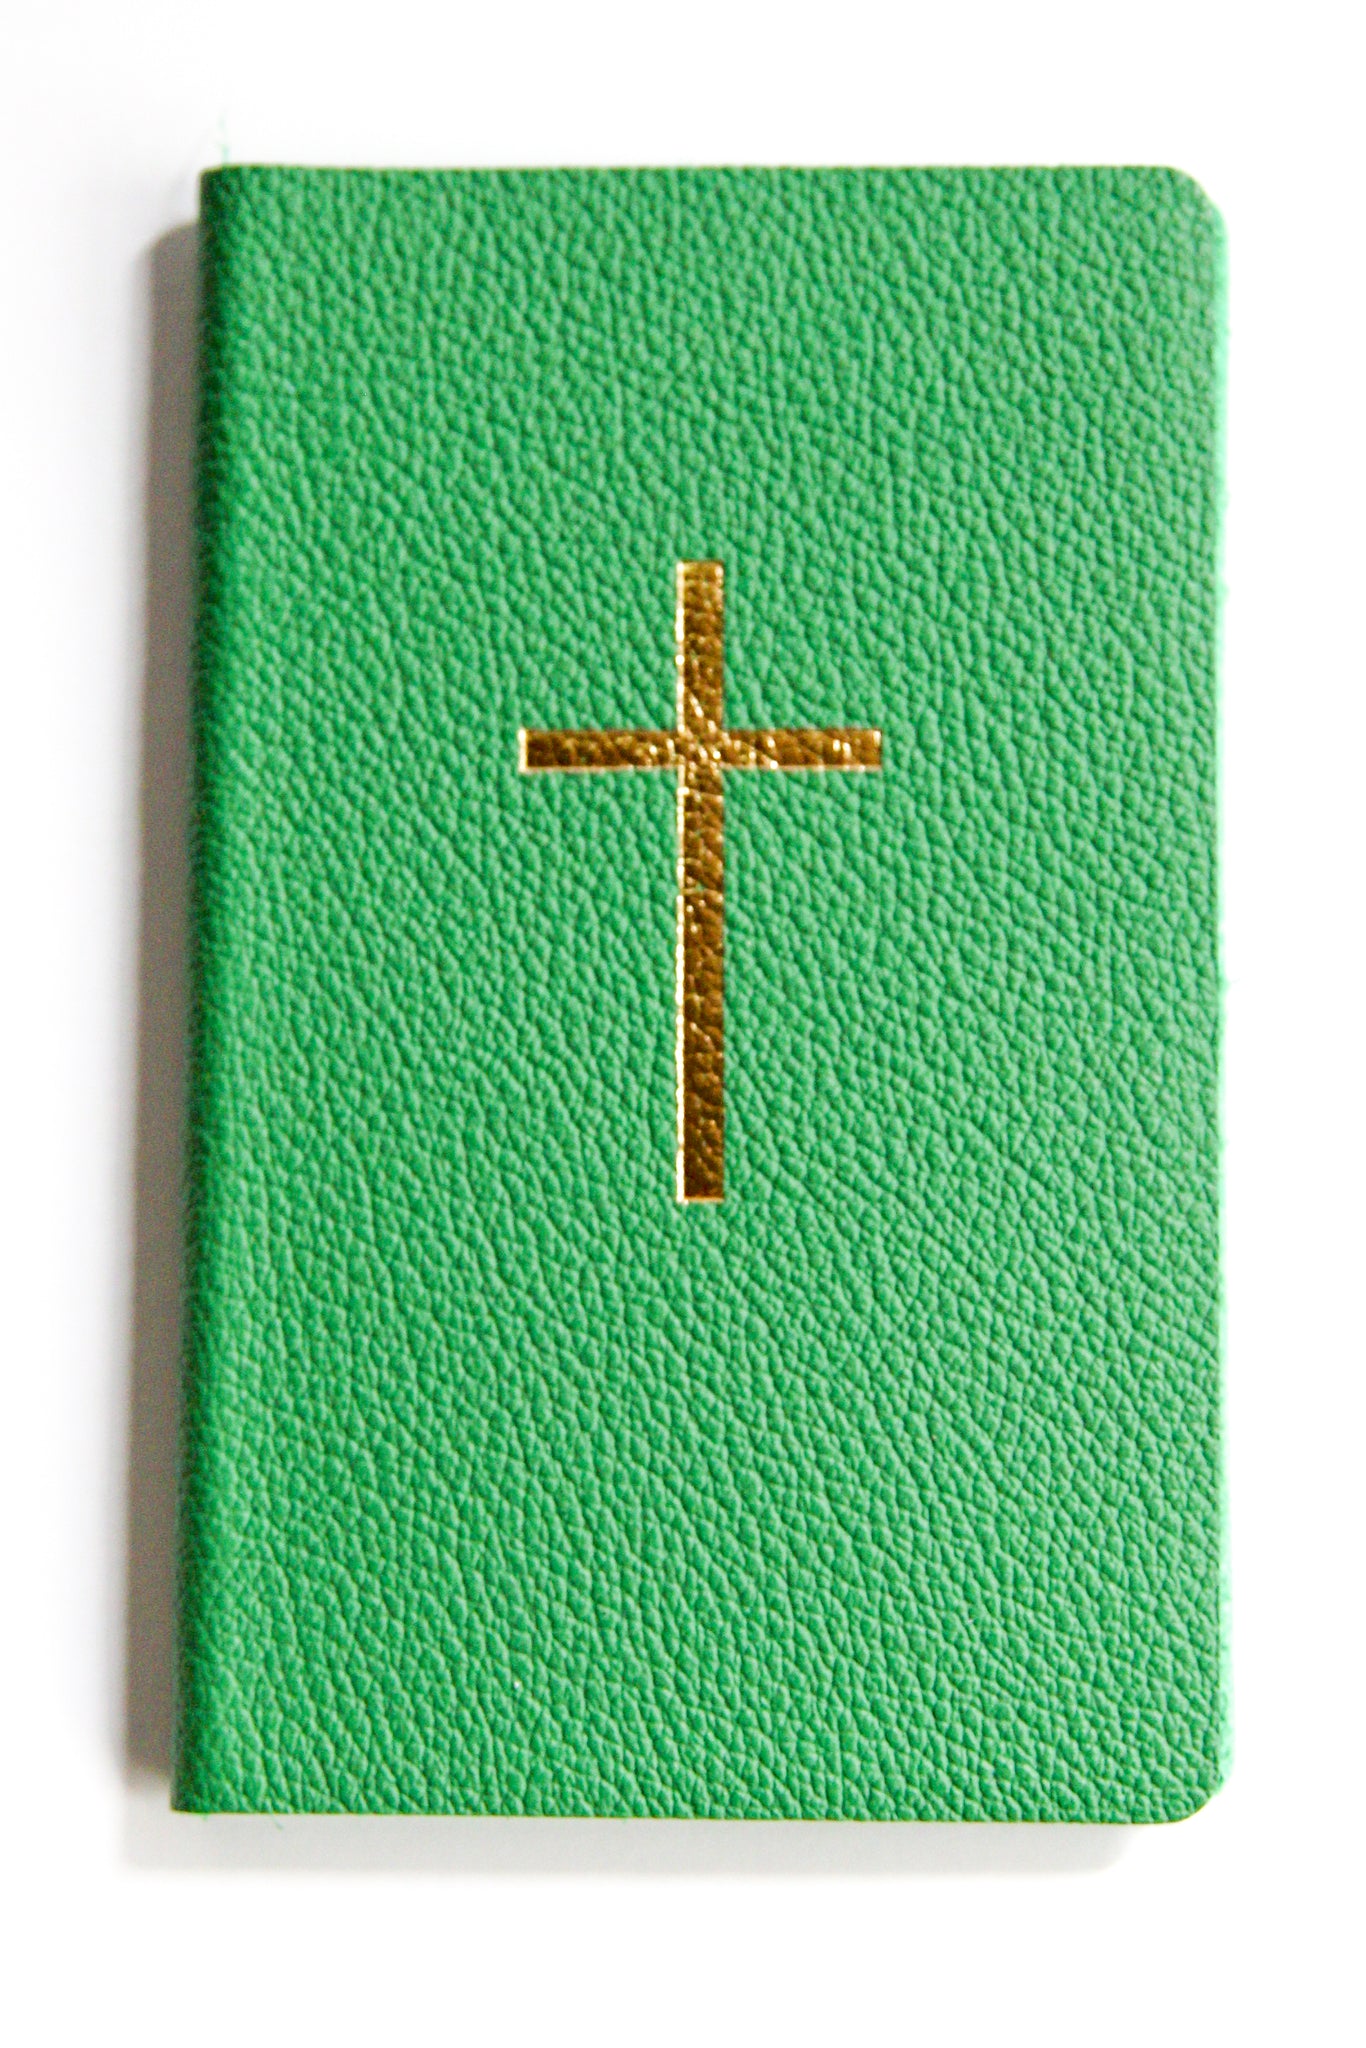 Leather Pocket Notebook Emerald Green Cross